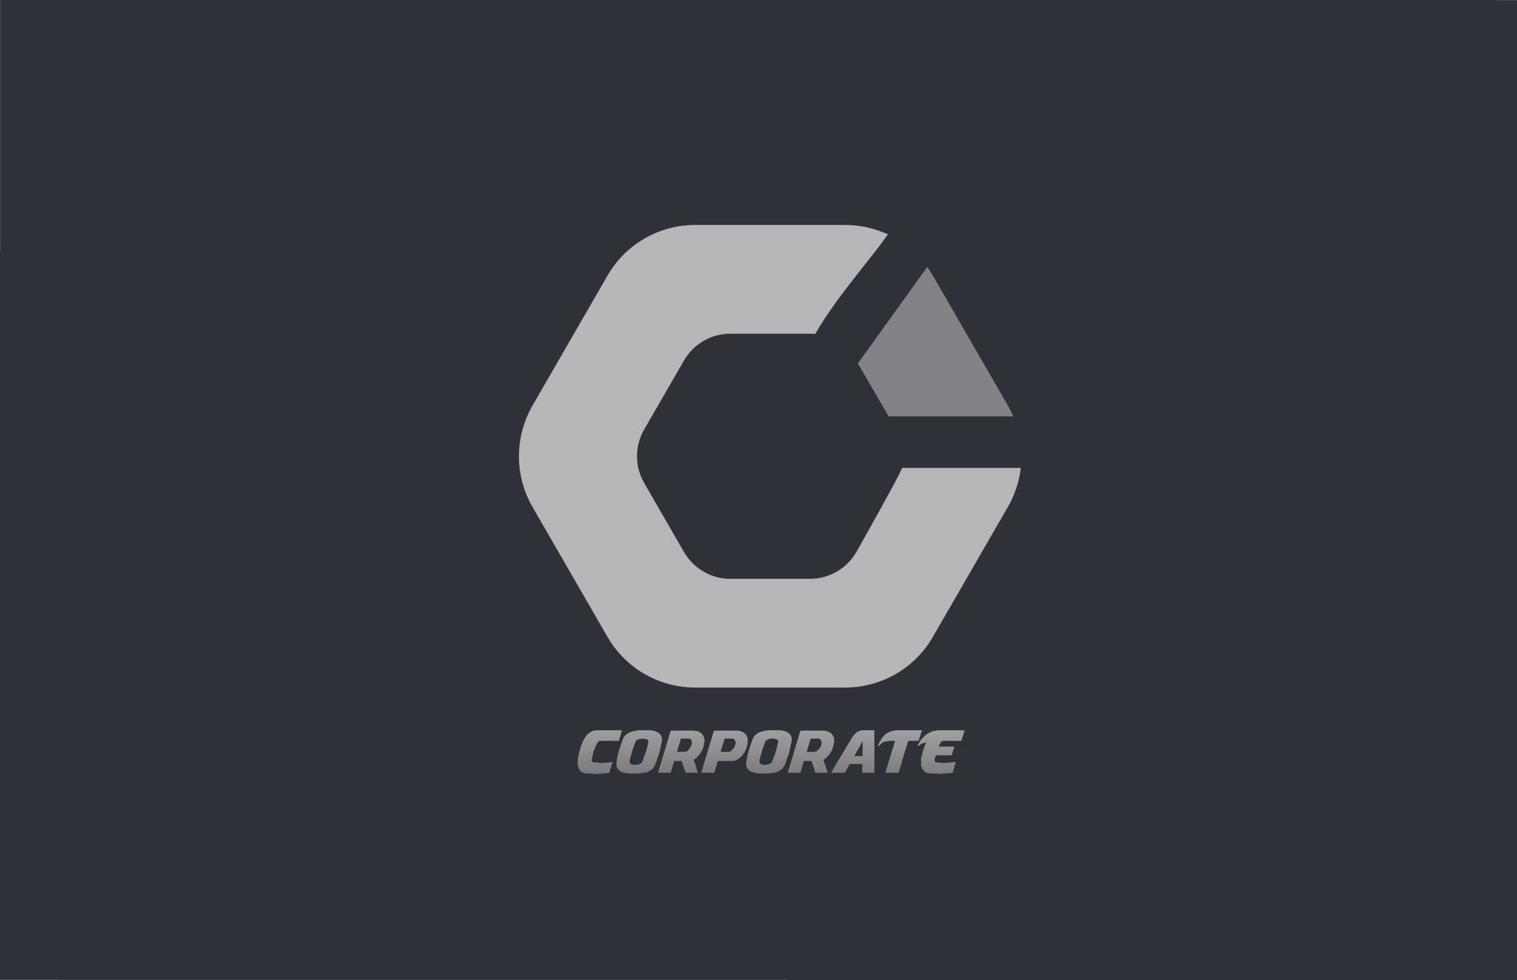 grey white corporate polygon business logo icon design for company vector